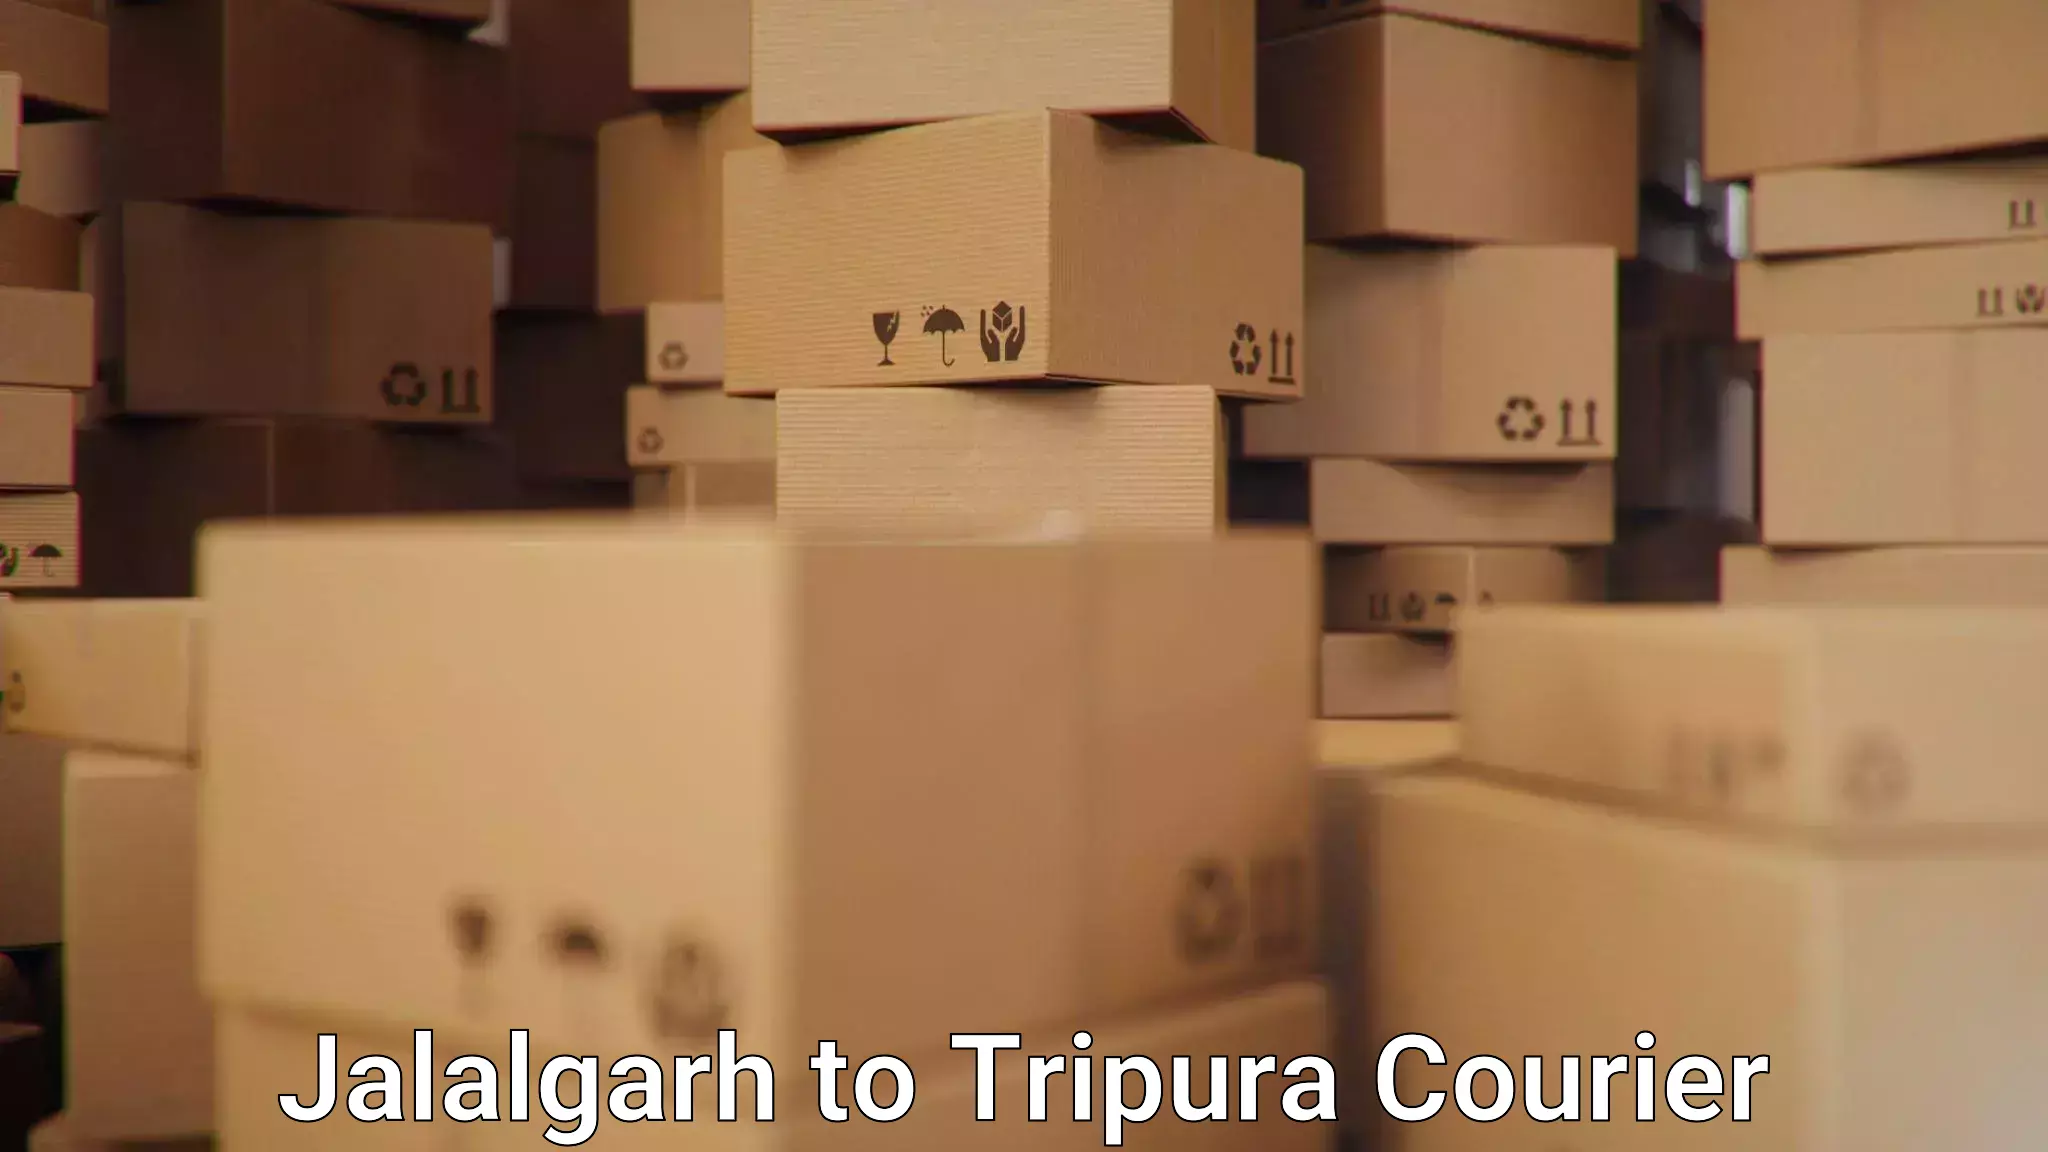 Automated parcel services Jalalgarh to Udaipur Tripura